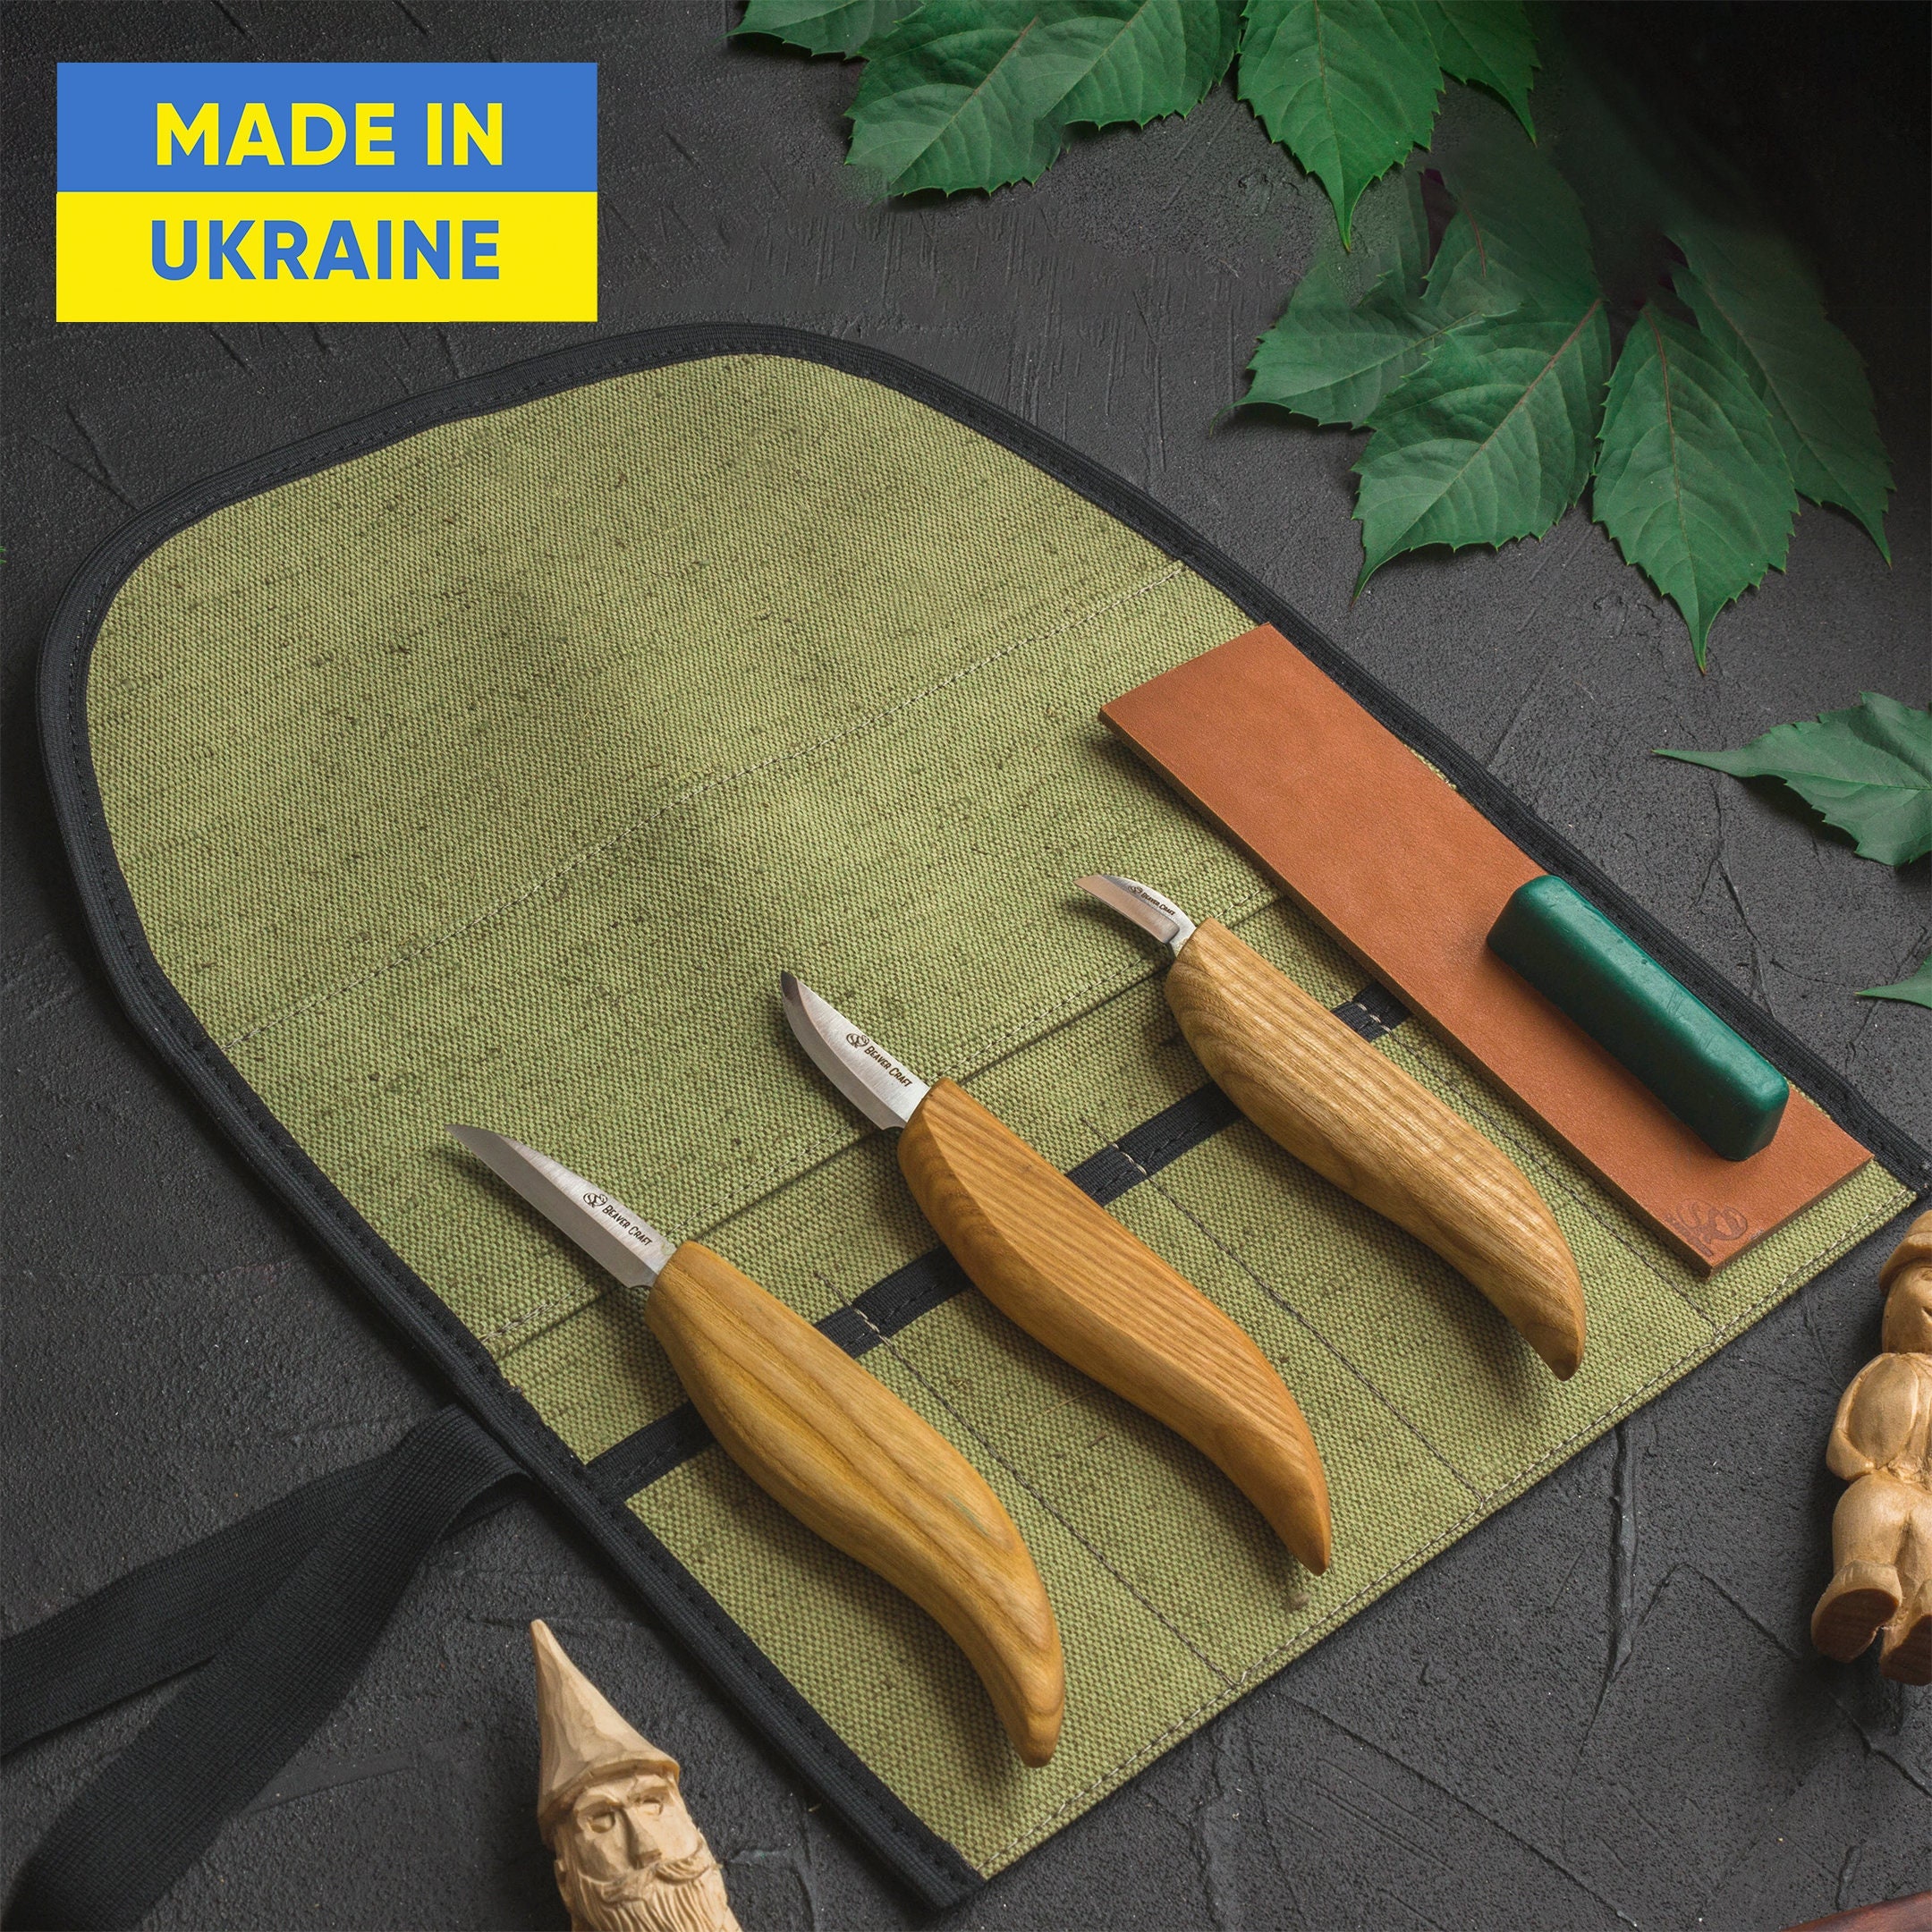 Basic Knives Set of 4 Knives Woodcarving Knives Wood Carving Tools